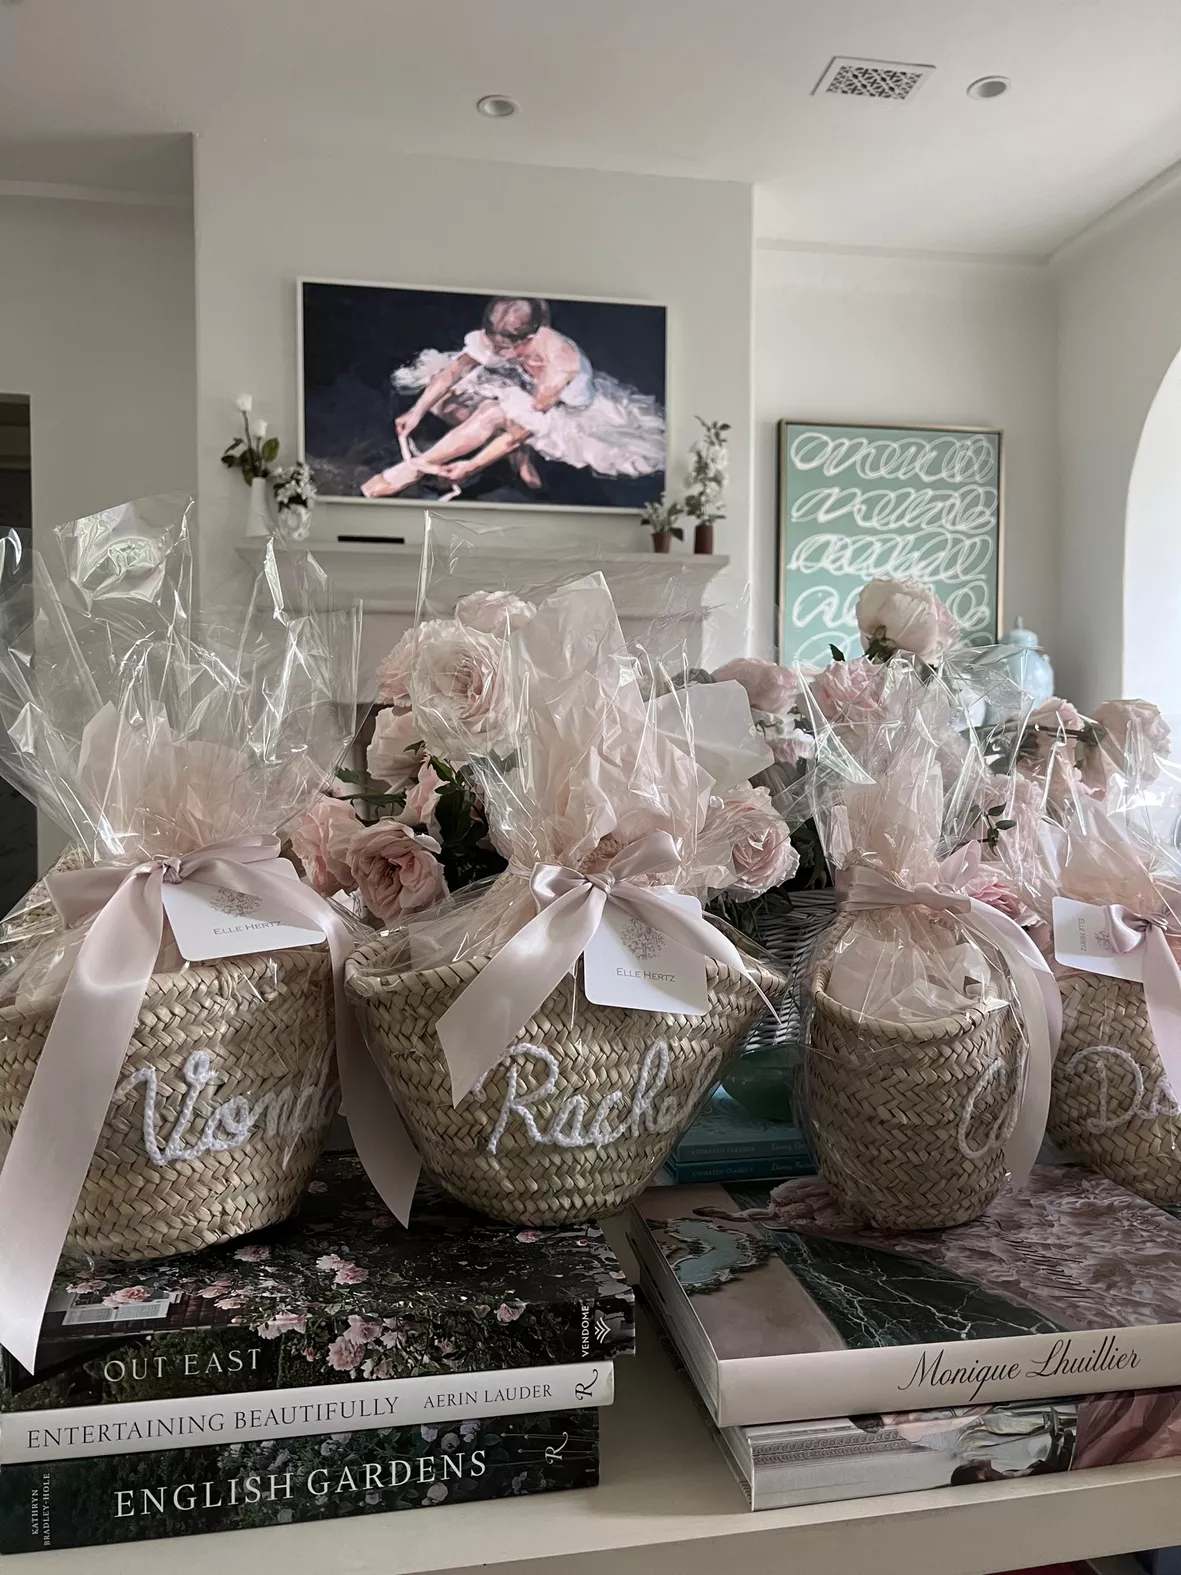 Personalized Bridal Shower Gift 2 Piece Set - Bachelorette Party